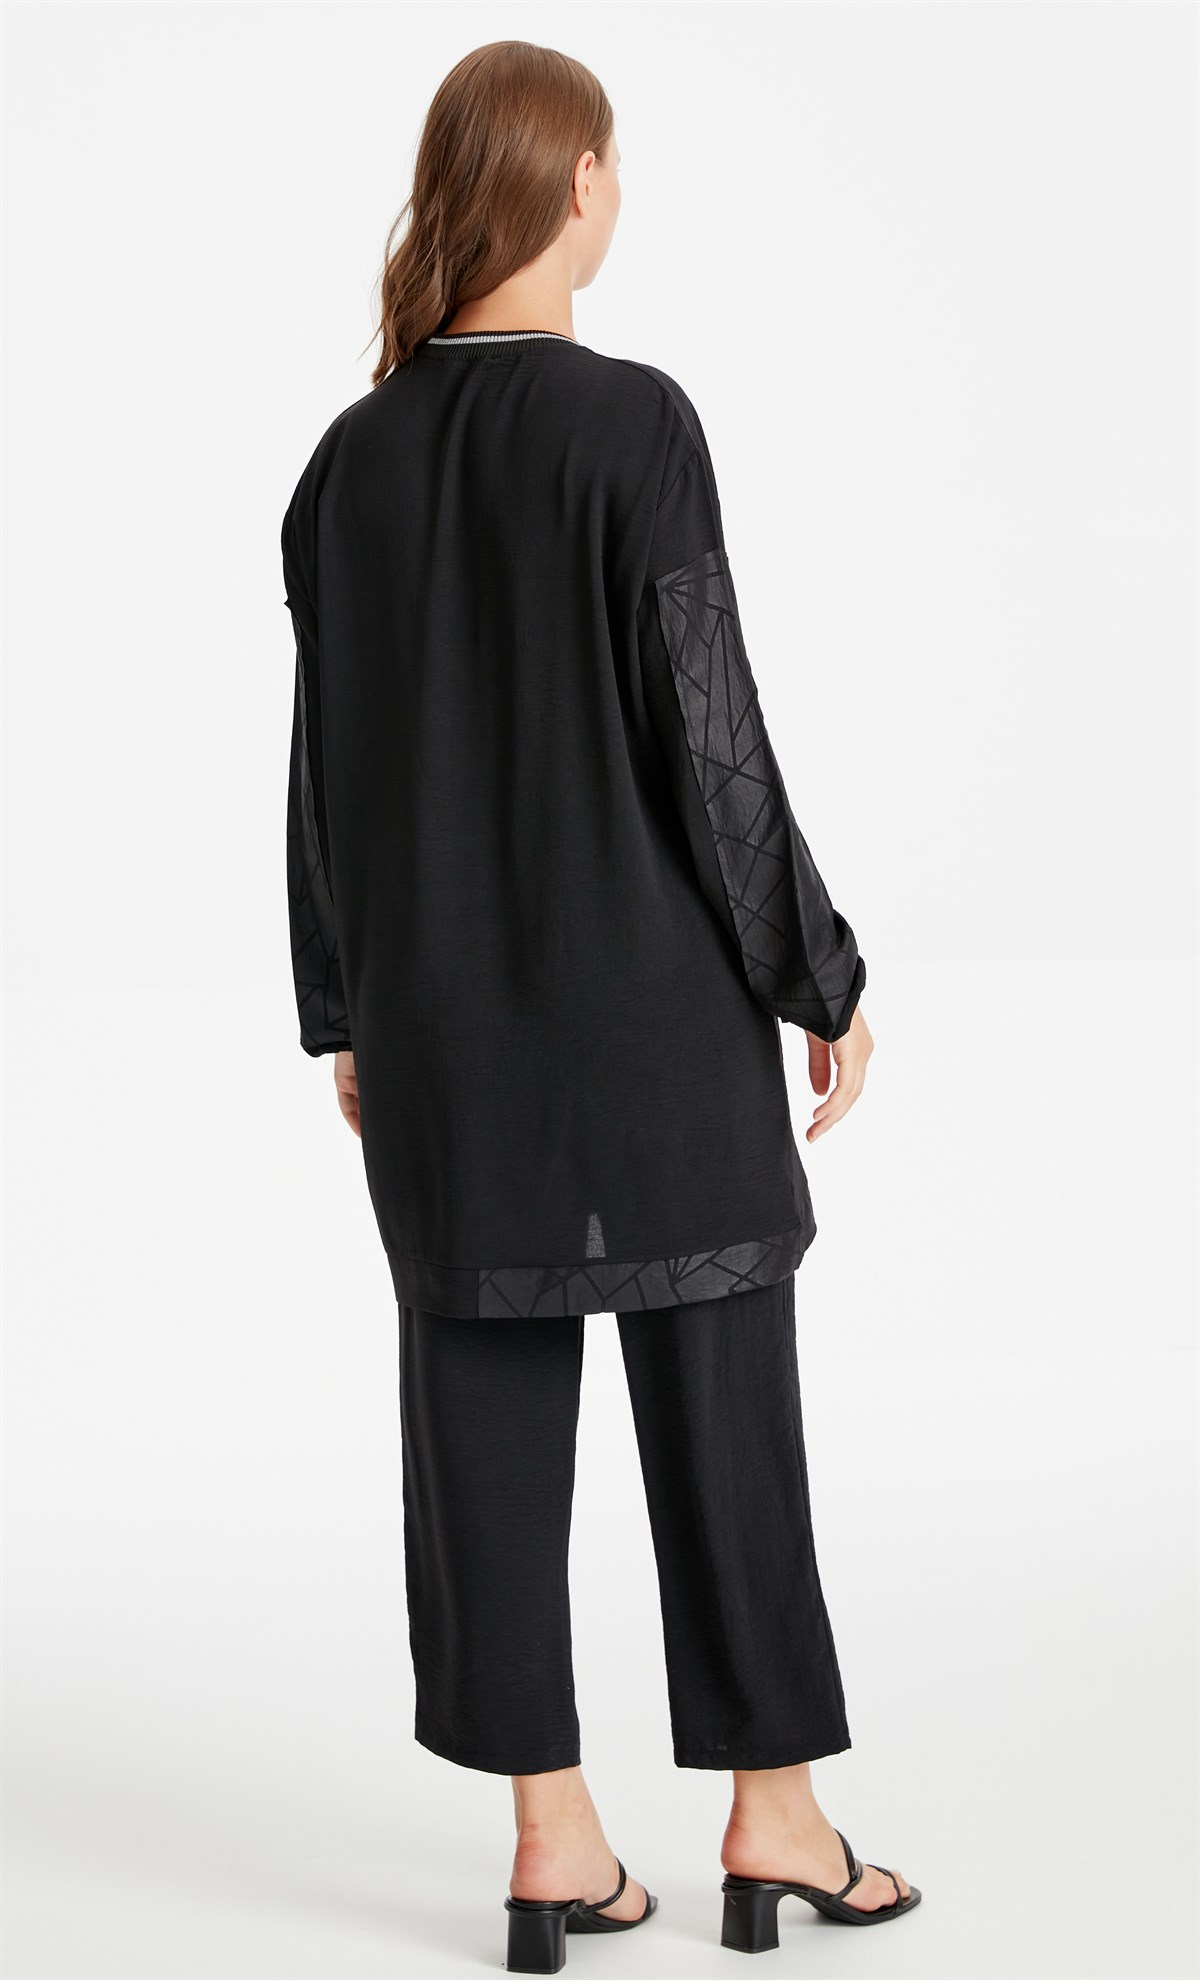 Ribana Yaka Kombinli Taş Detaylı Bol Paça Pantolon Takım - Siyah